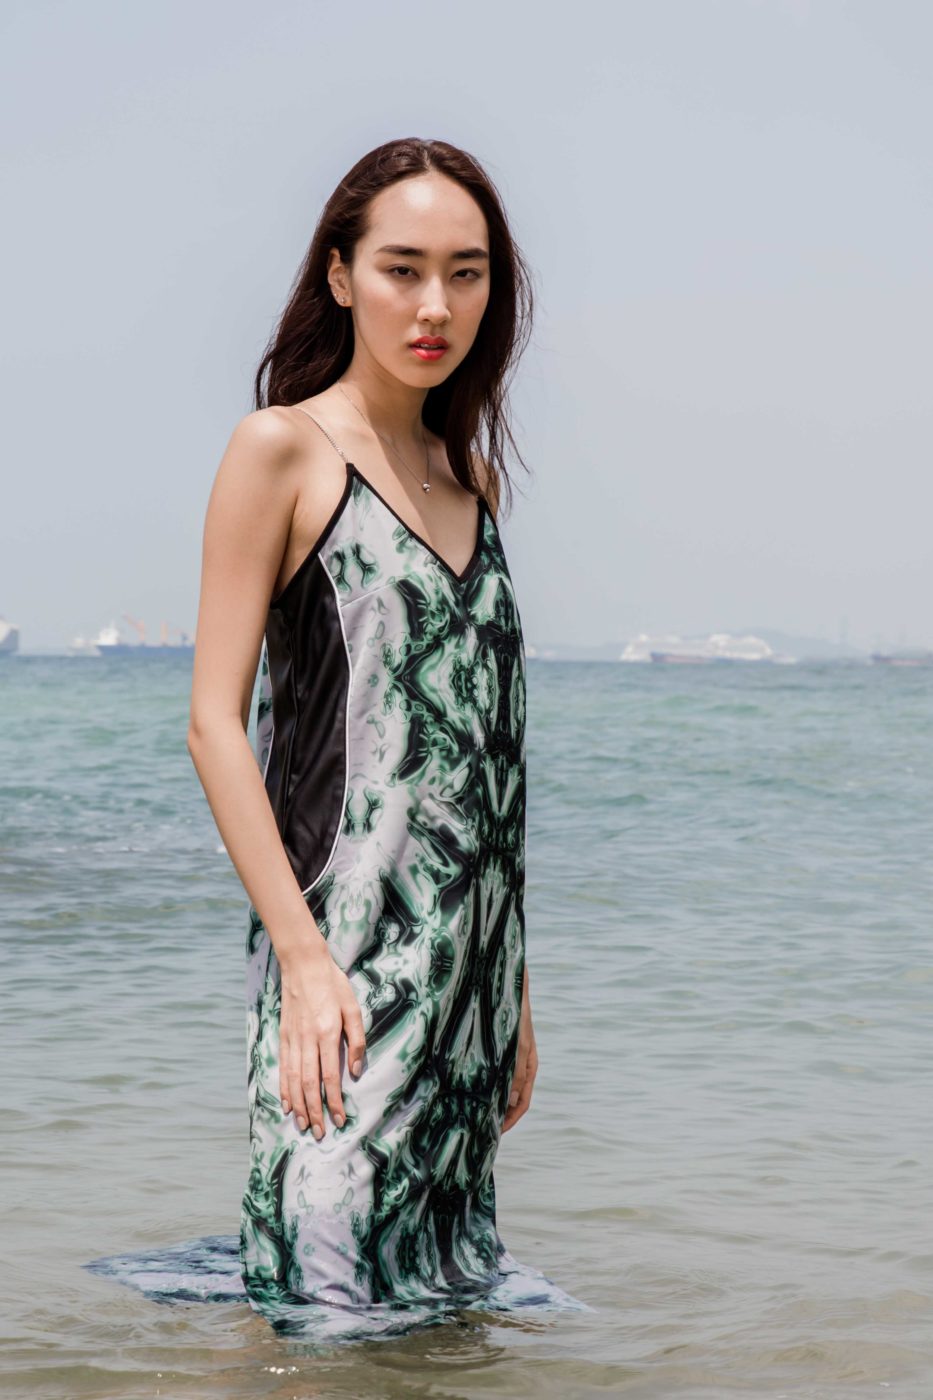 celine shin basic models female fashion singapore korean asian